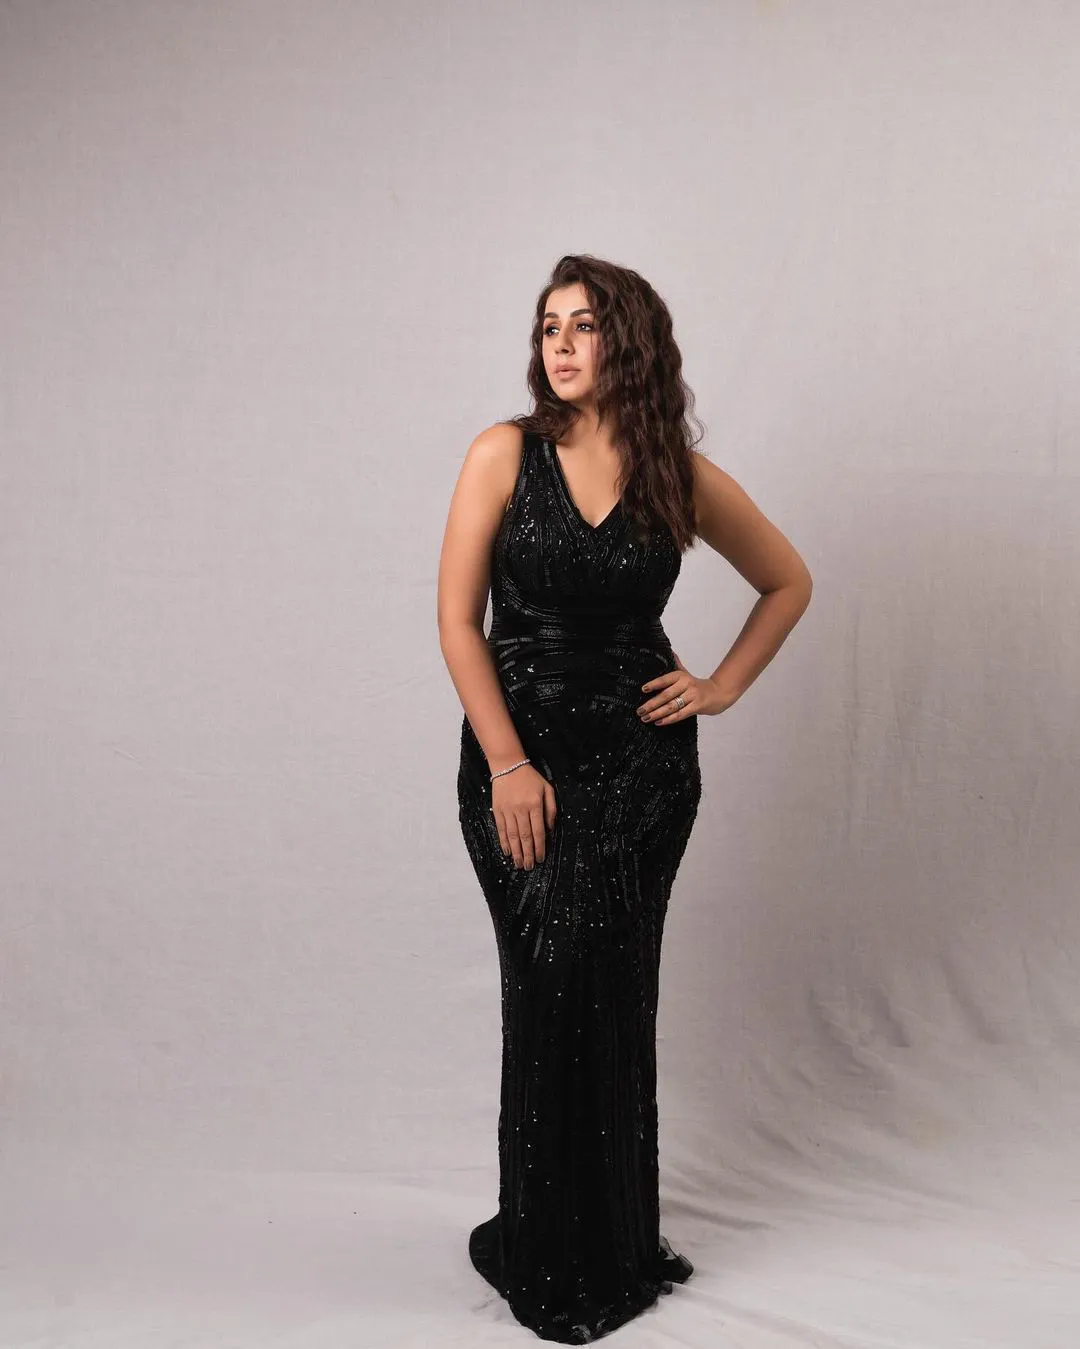 Nikkii Galrani Shines in Black Dress